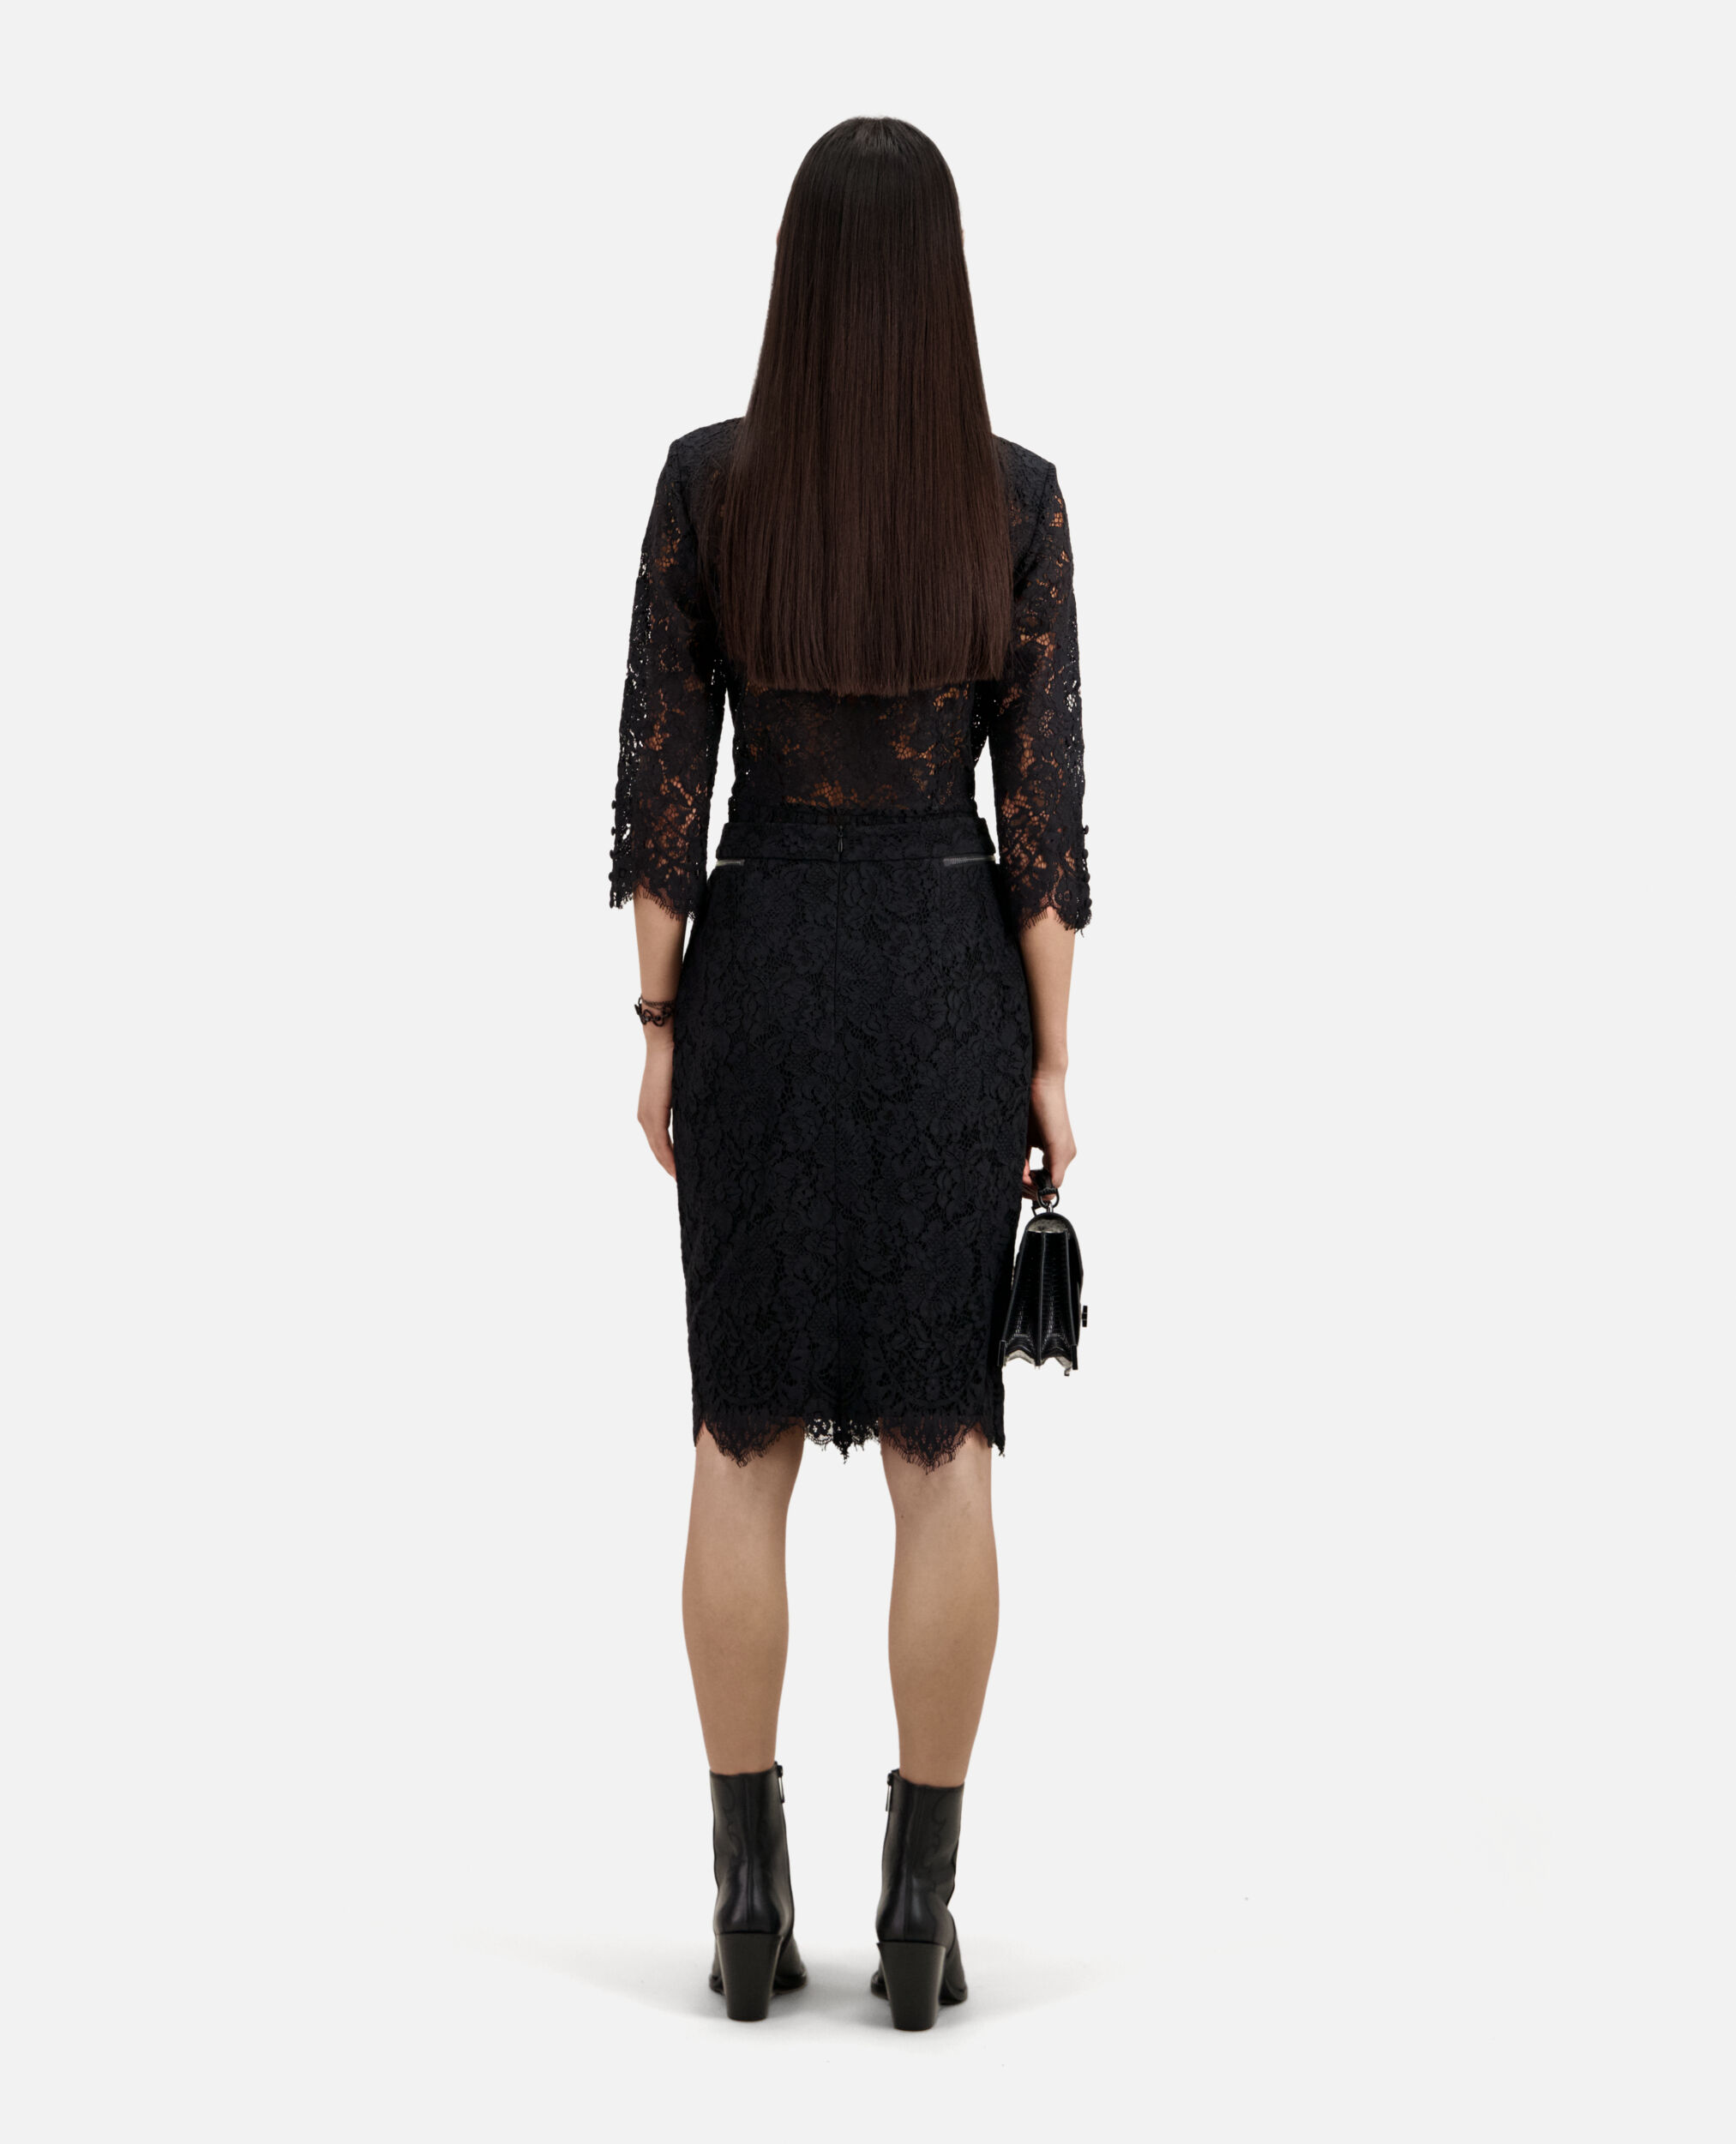 Black lace mid-length pencil skirt, BLACK, hi-res image number null